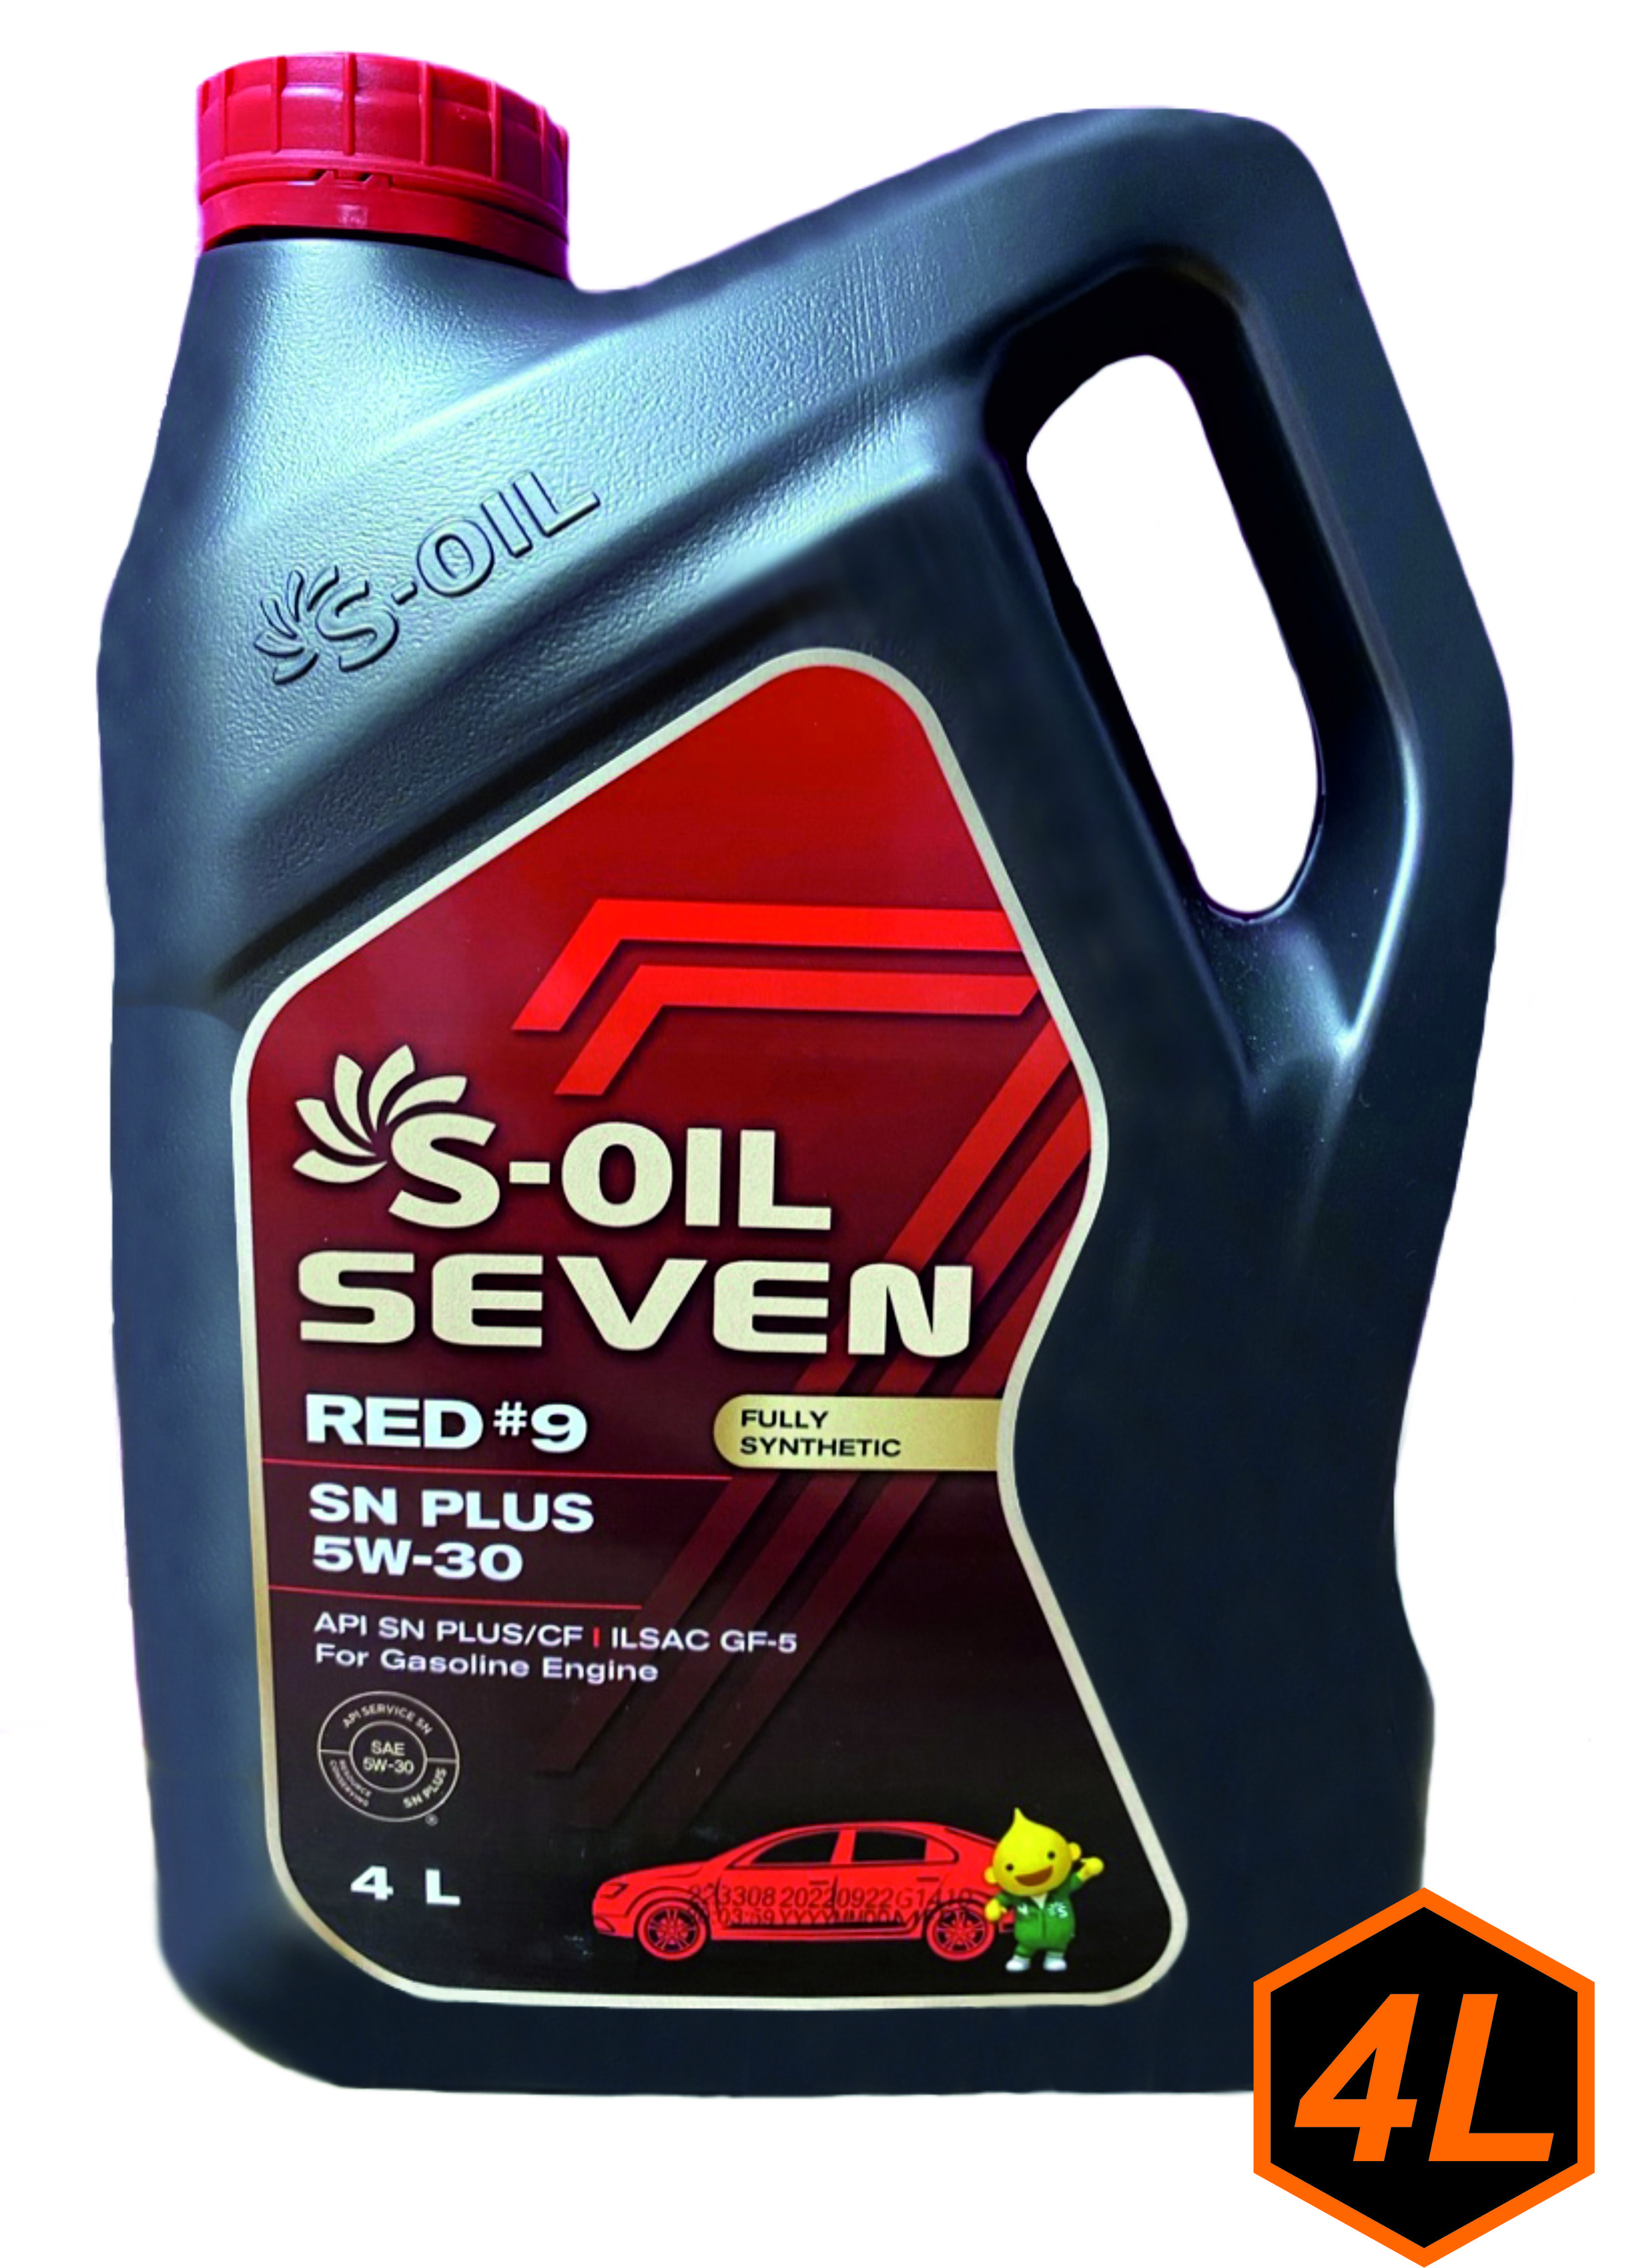 Масло севен. S-Oil Seven 5w-30. Масло s-Oil Seven. S-Oil. Seven масло s-Oil цена 5 л.